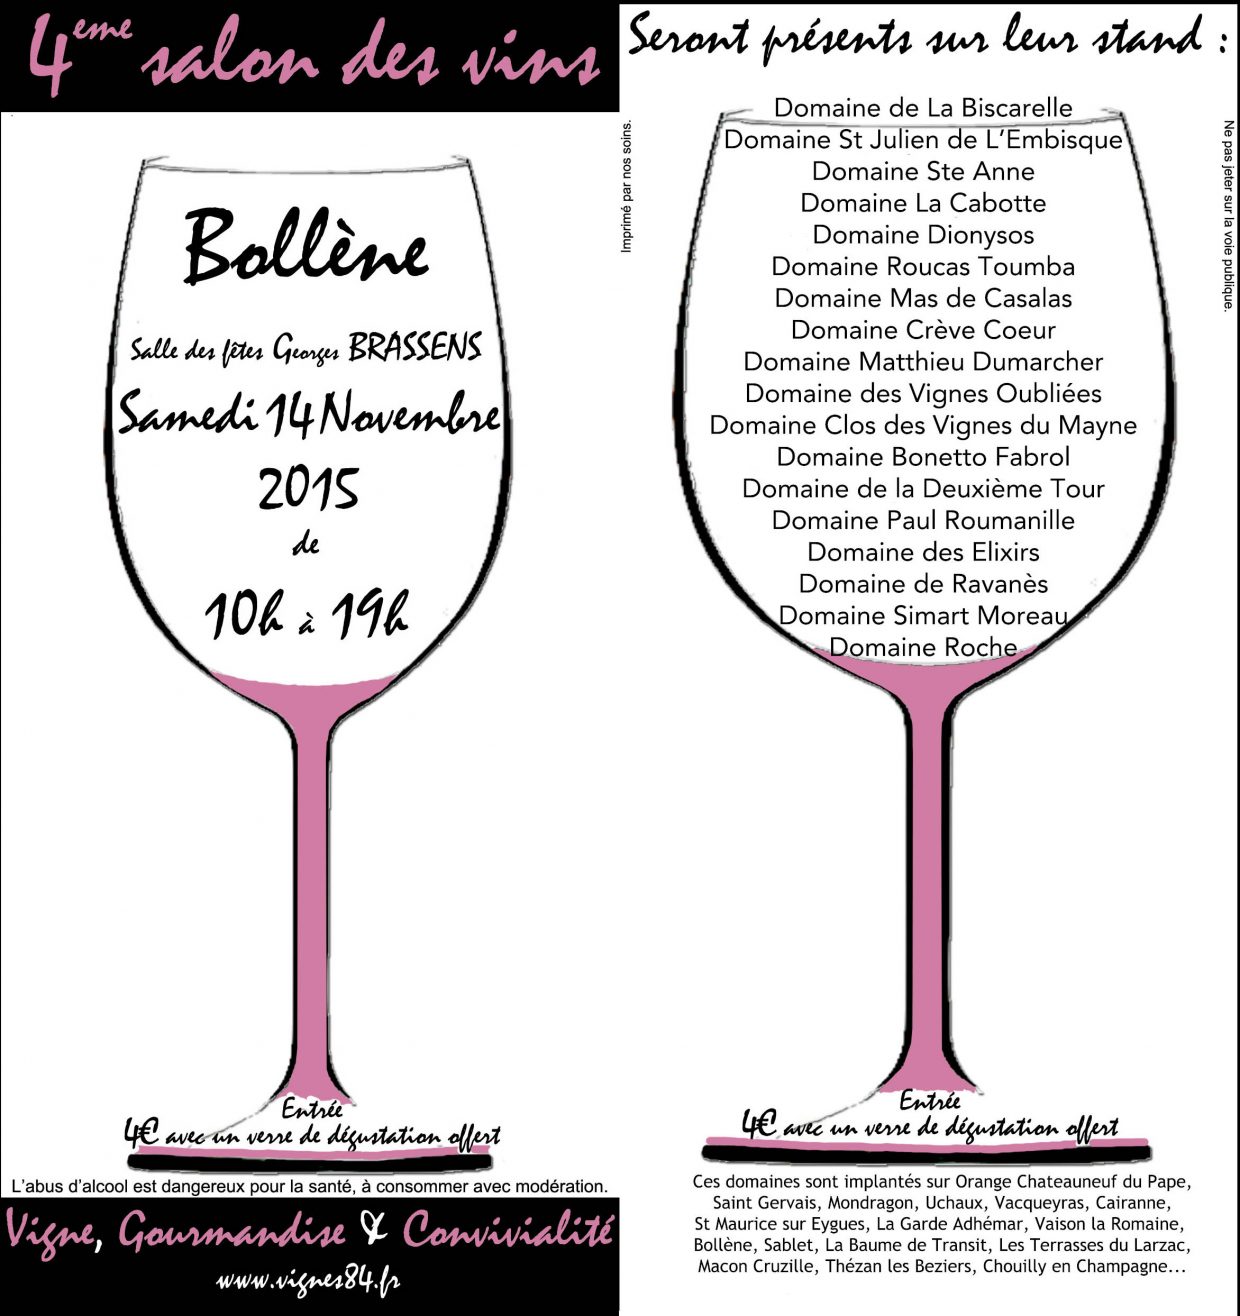 Salon des vins de Bolléne, 14 novembre